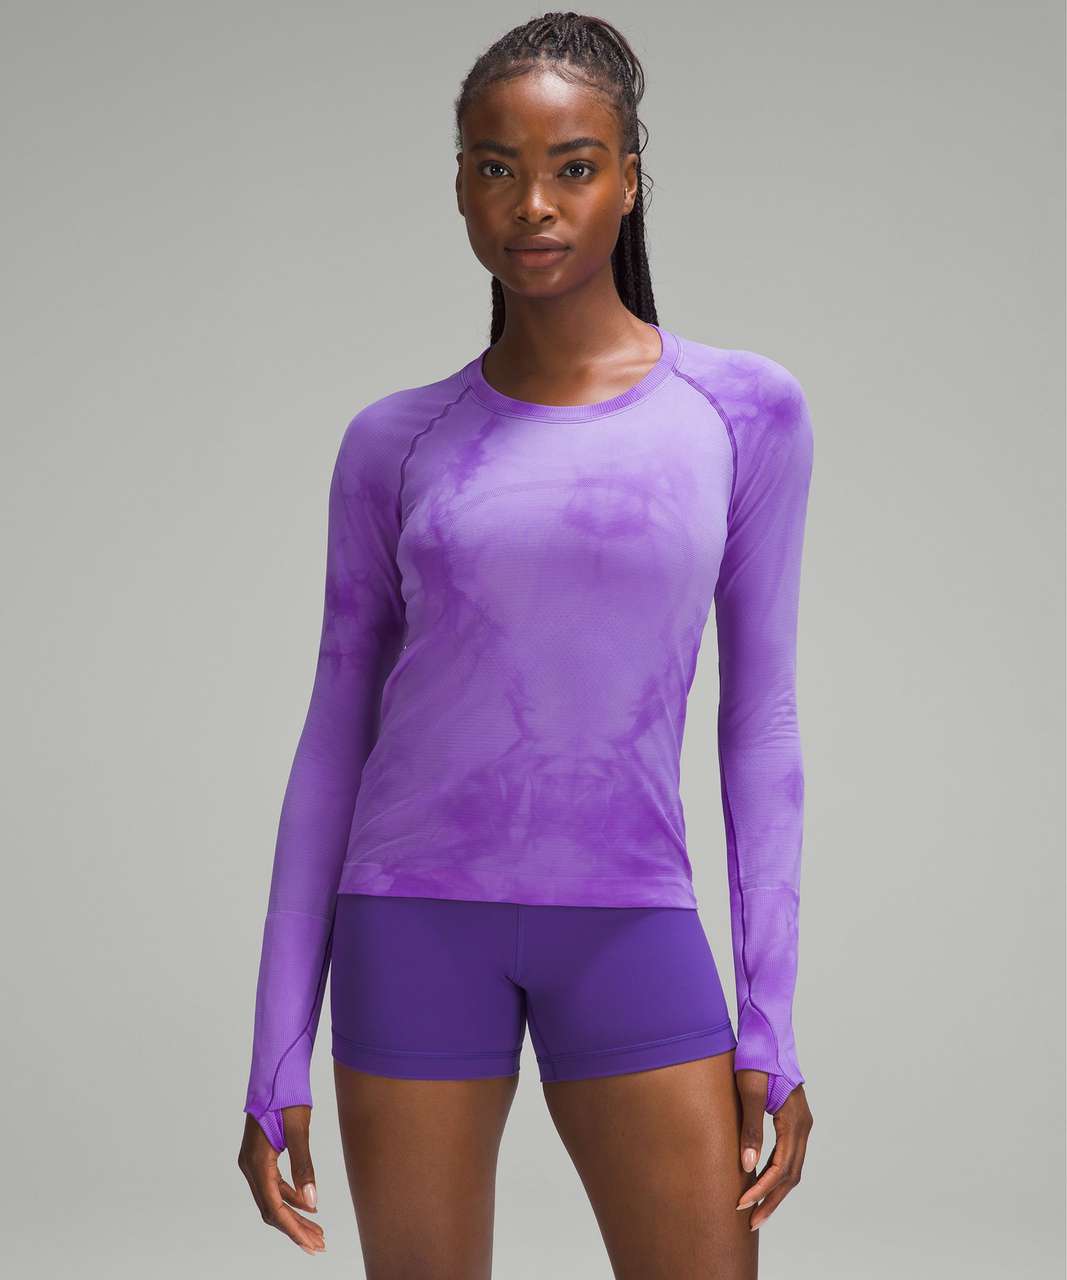 Lululemon Swiftly Tech Long-Sleeve Shirt 2.0 *Race Length - Marble Dye Atomic Purple / Atomic Purple